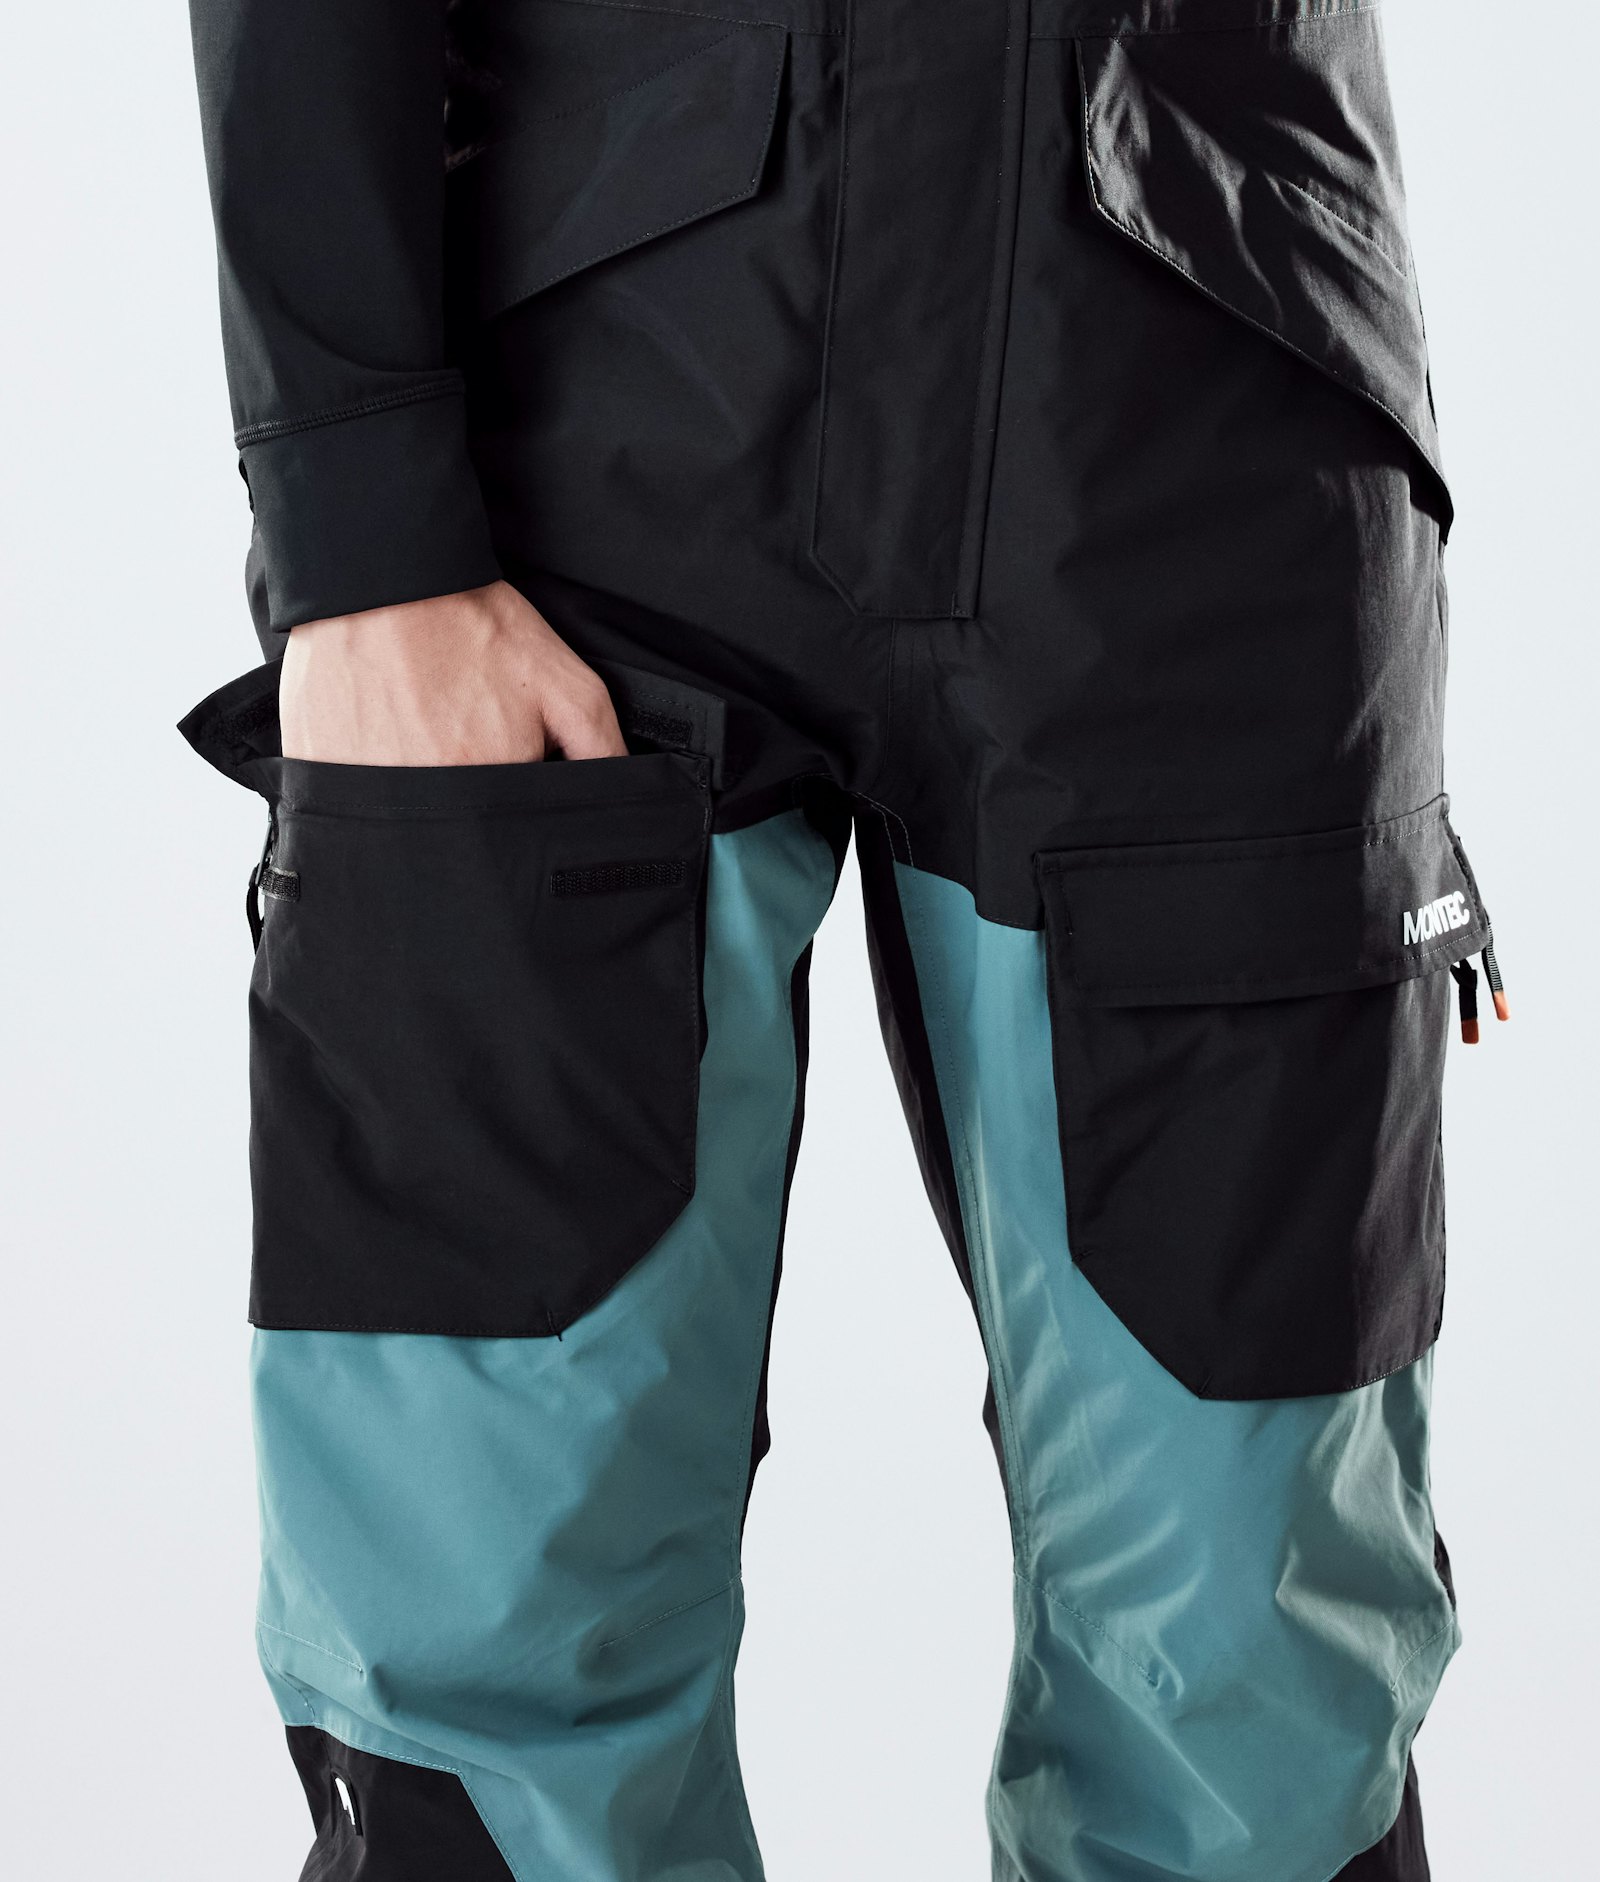 Fawk 2020 Snowboard Pants Men Black/Atlantic